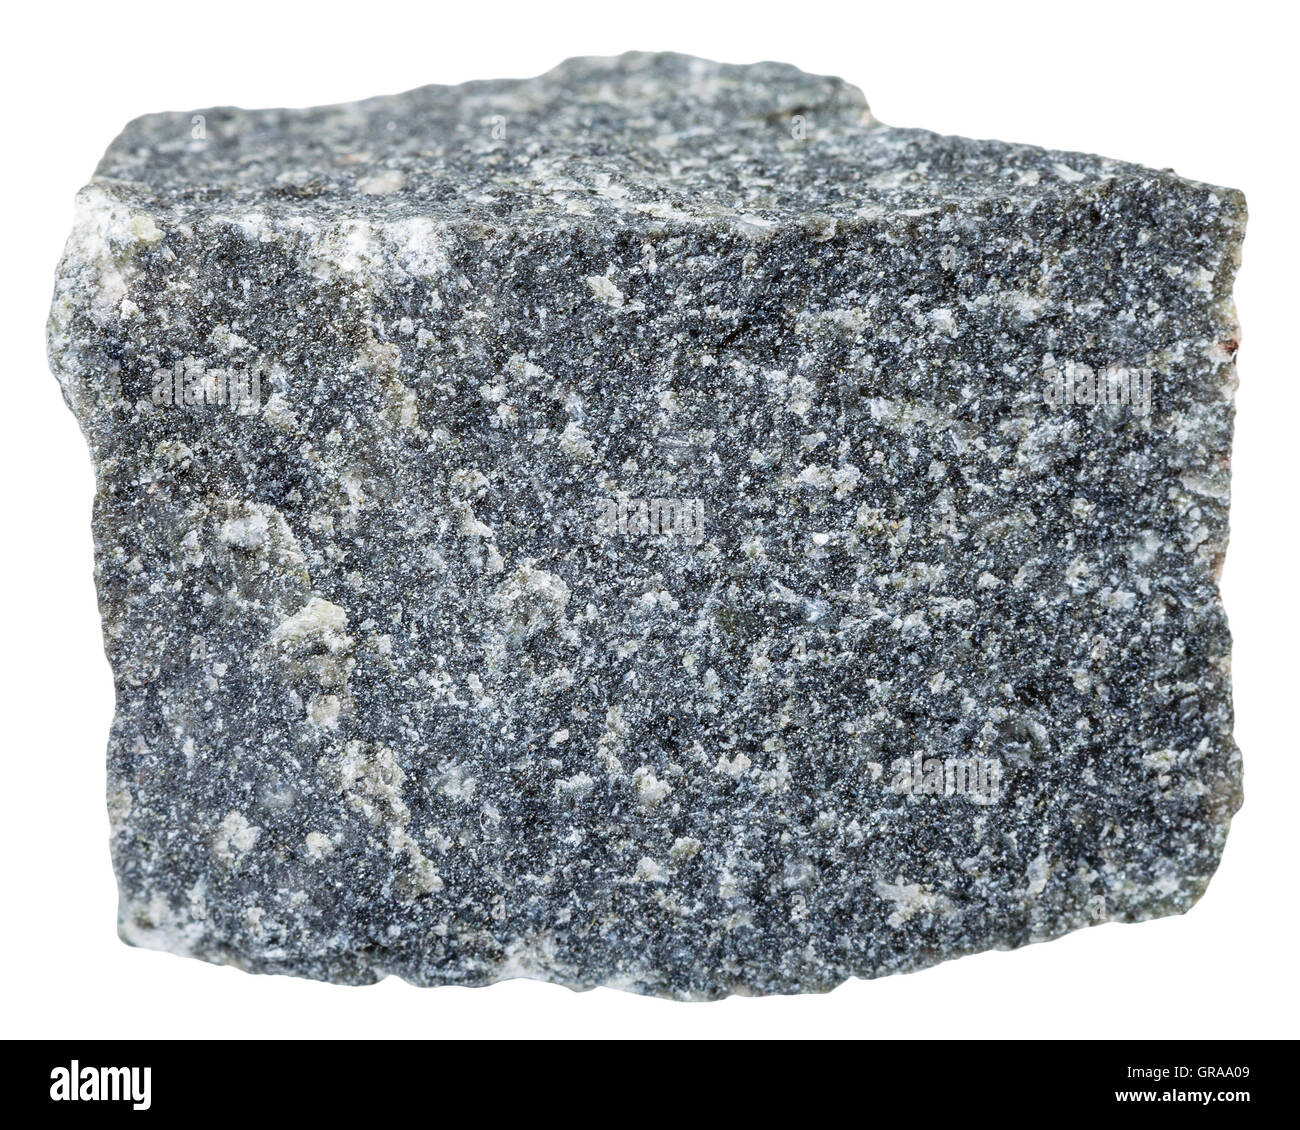 macro shooting of Igneous rock specimens - Andesite stone isolated on white background Stock Photo